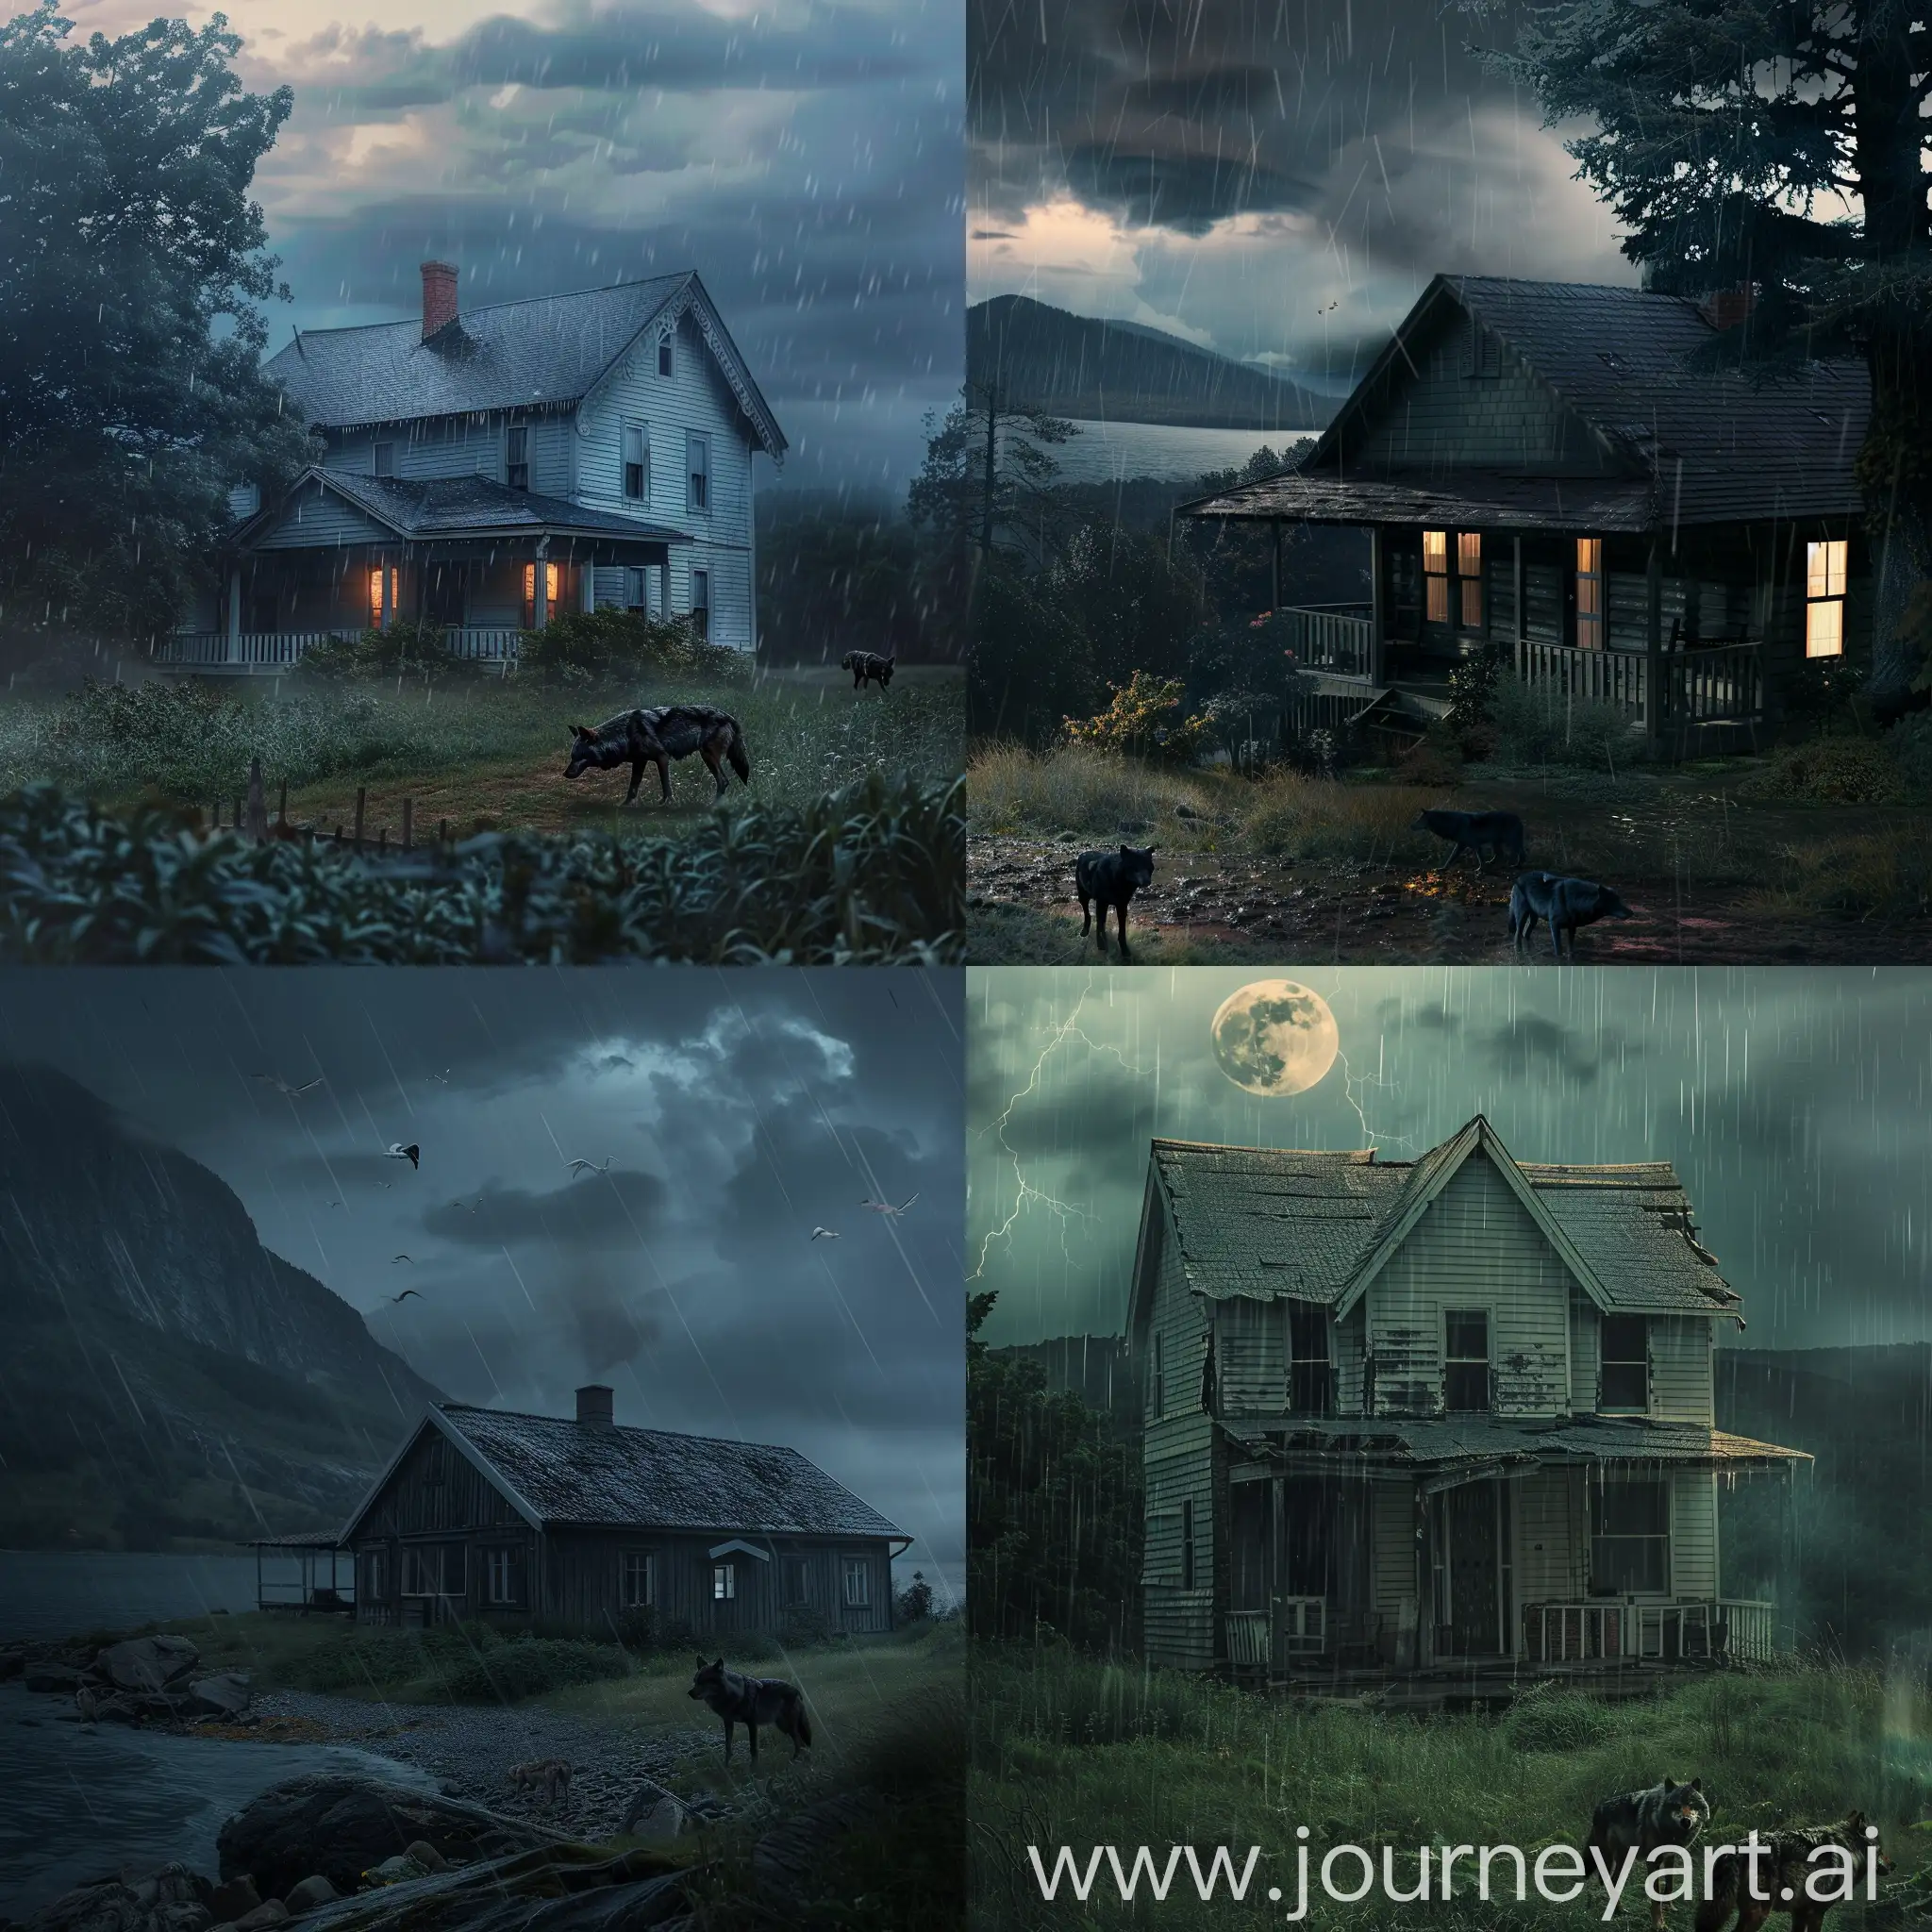 raw photo of an isolated house, midnight, raining, wolfs, beautiful scenery, minimal light